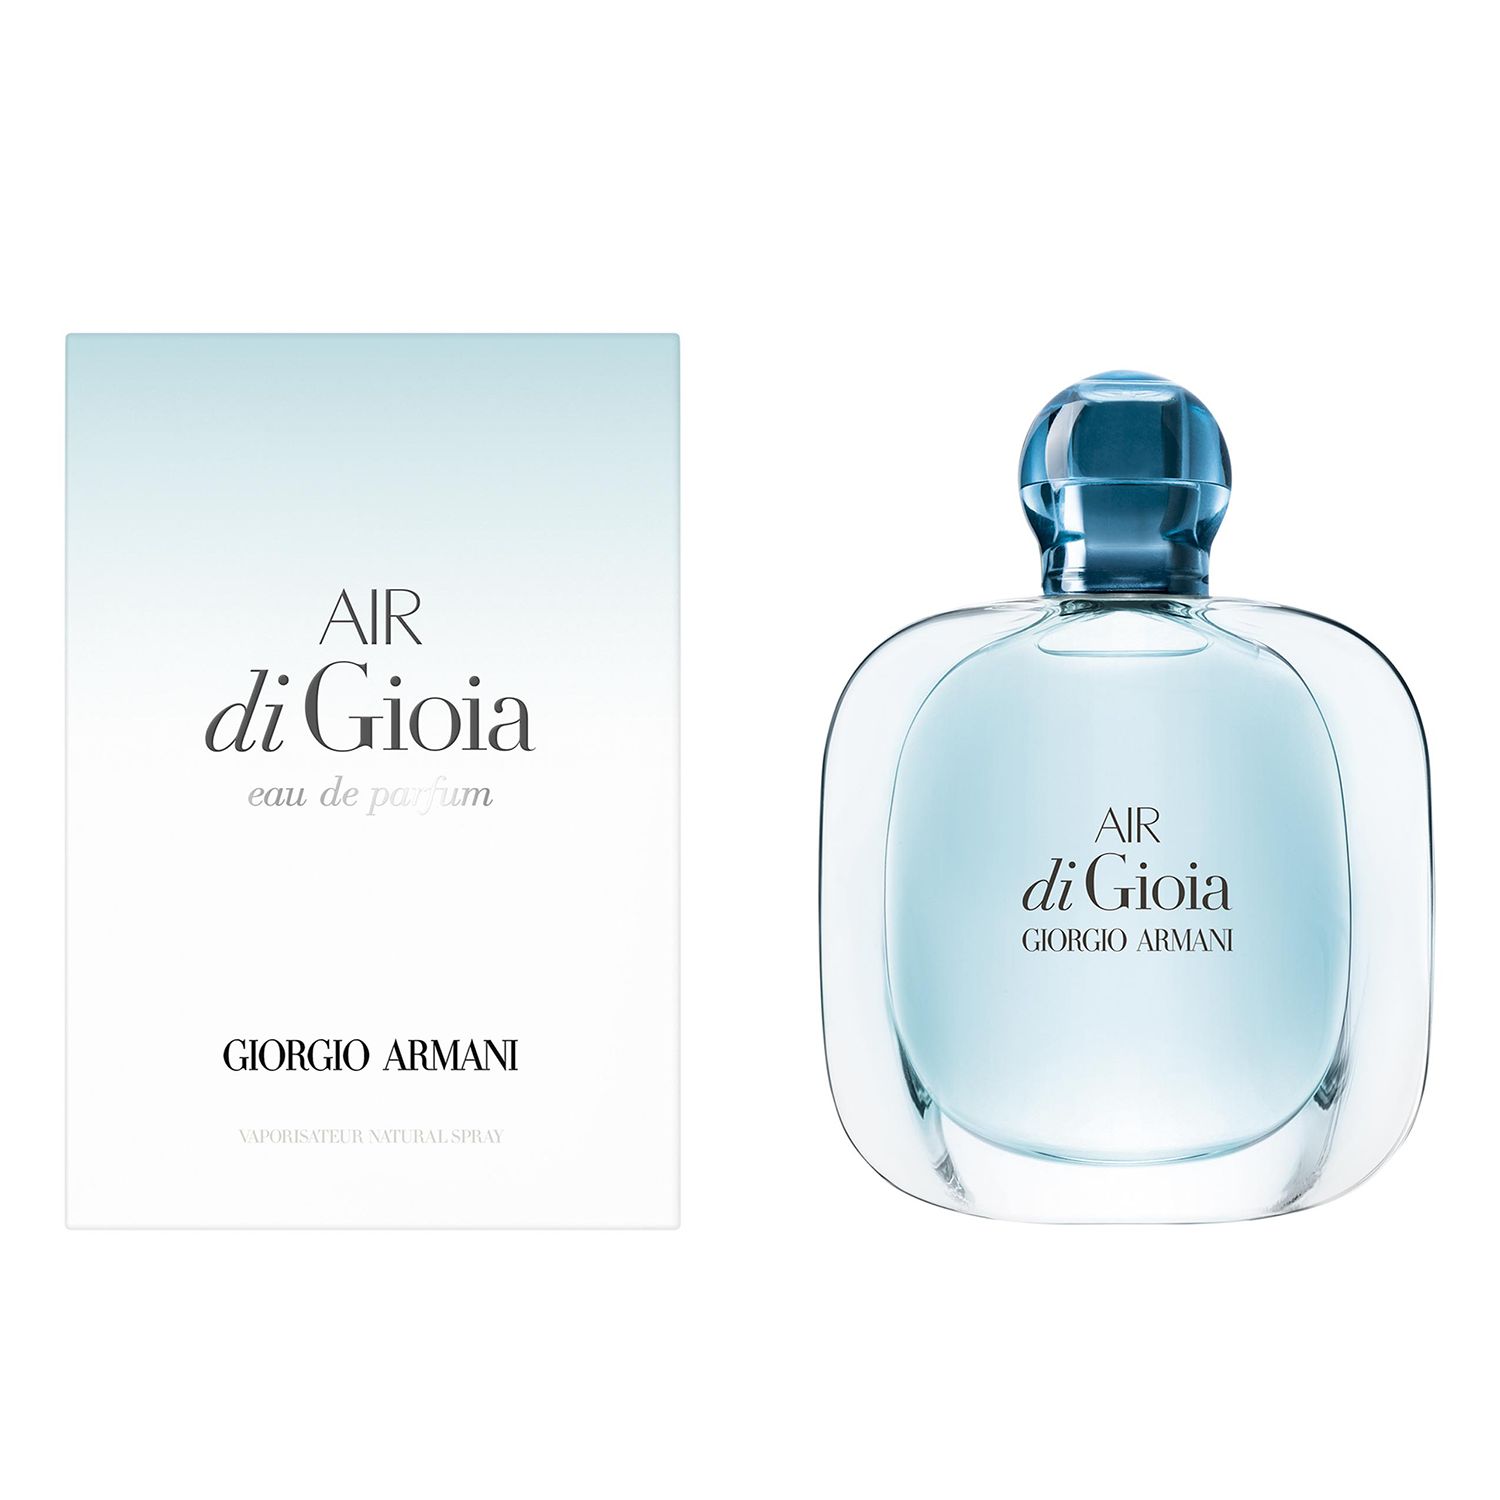 giorgio armani women's perfume